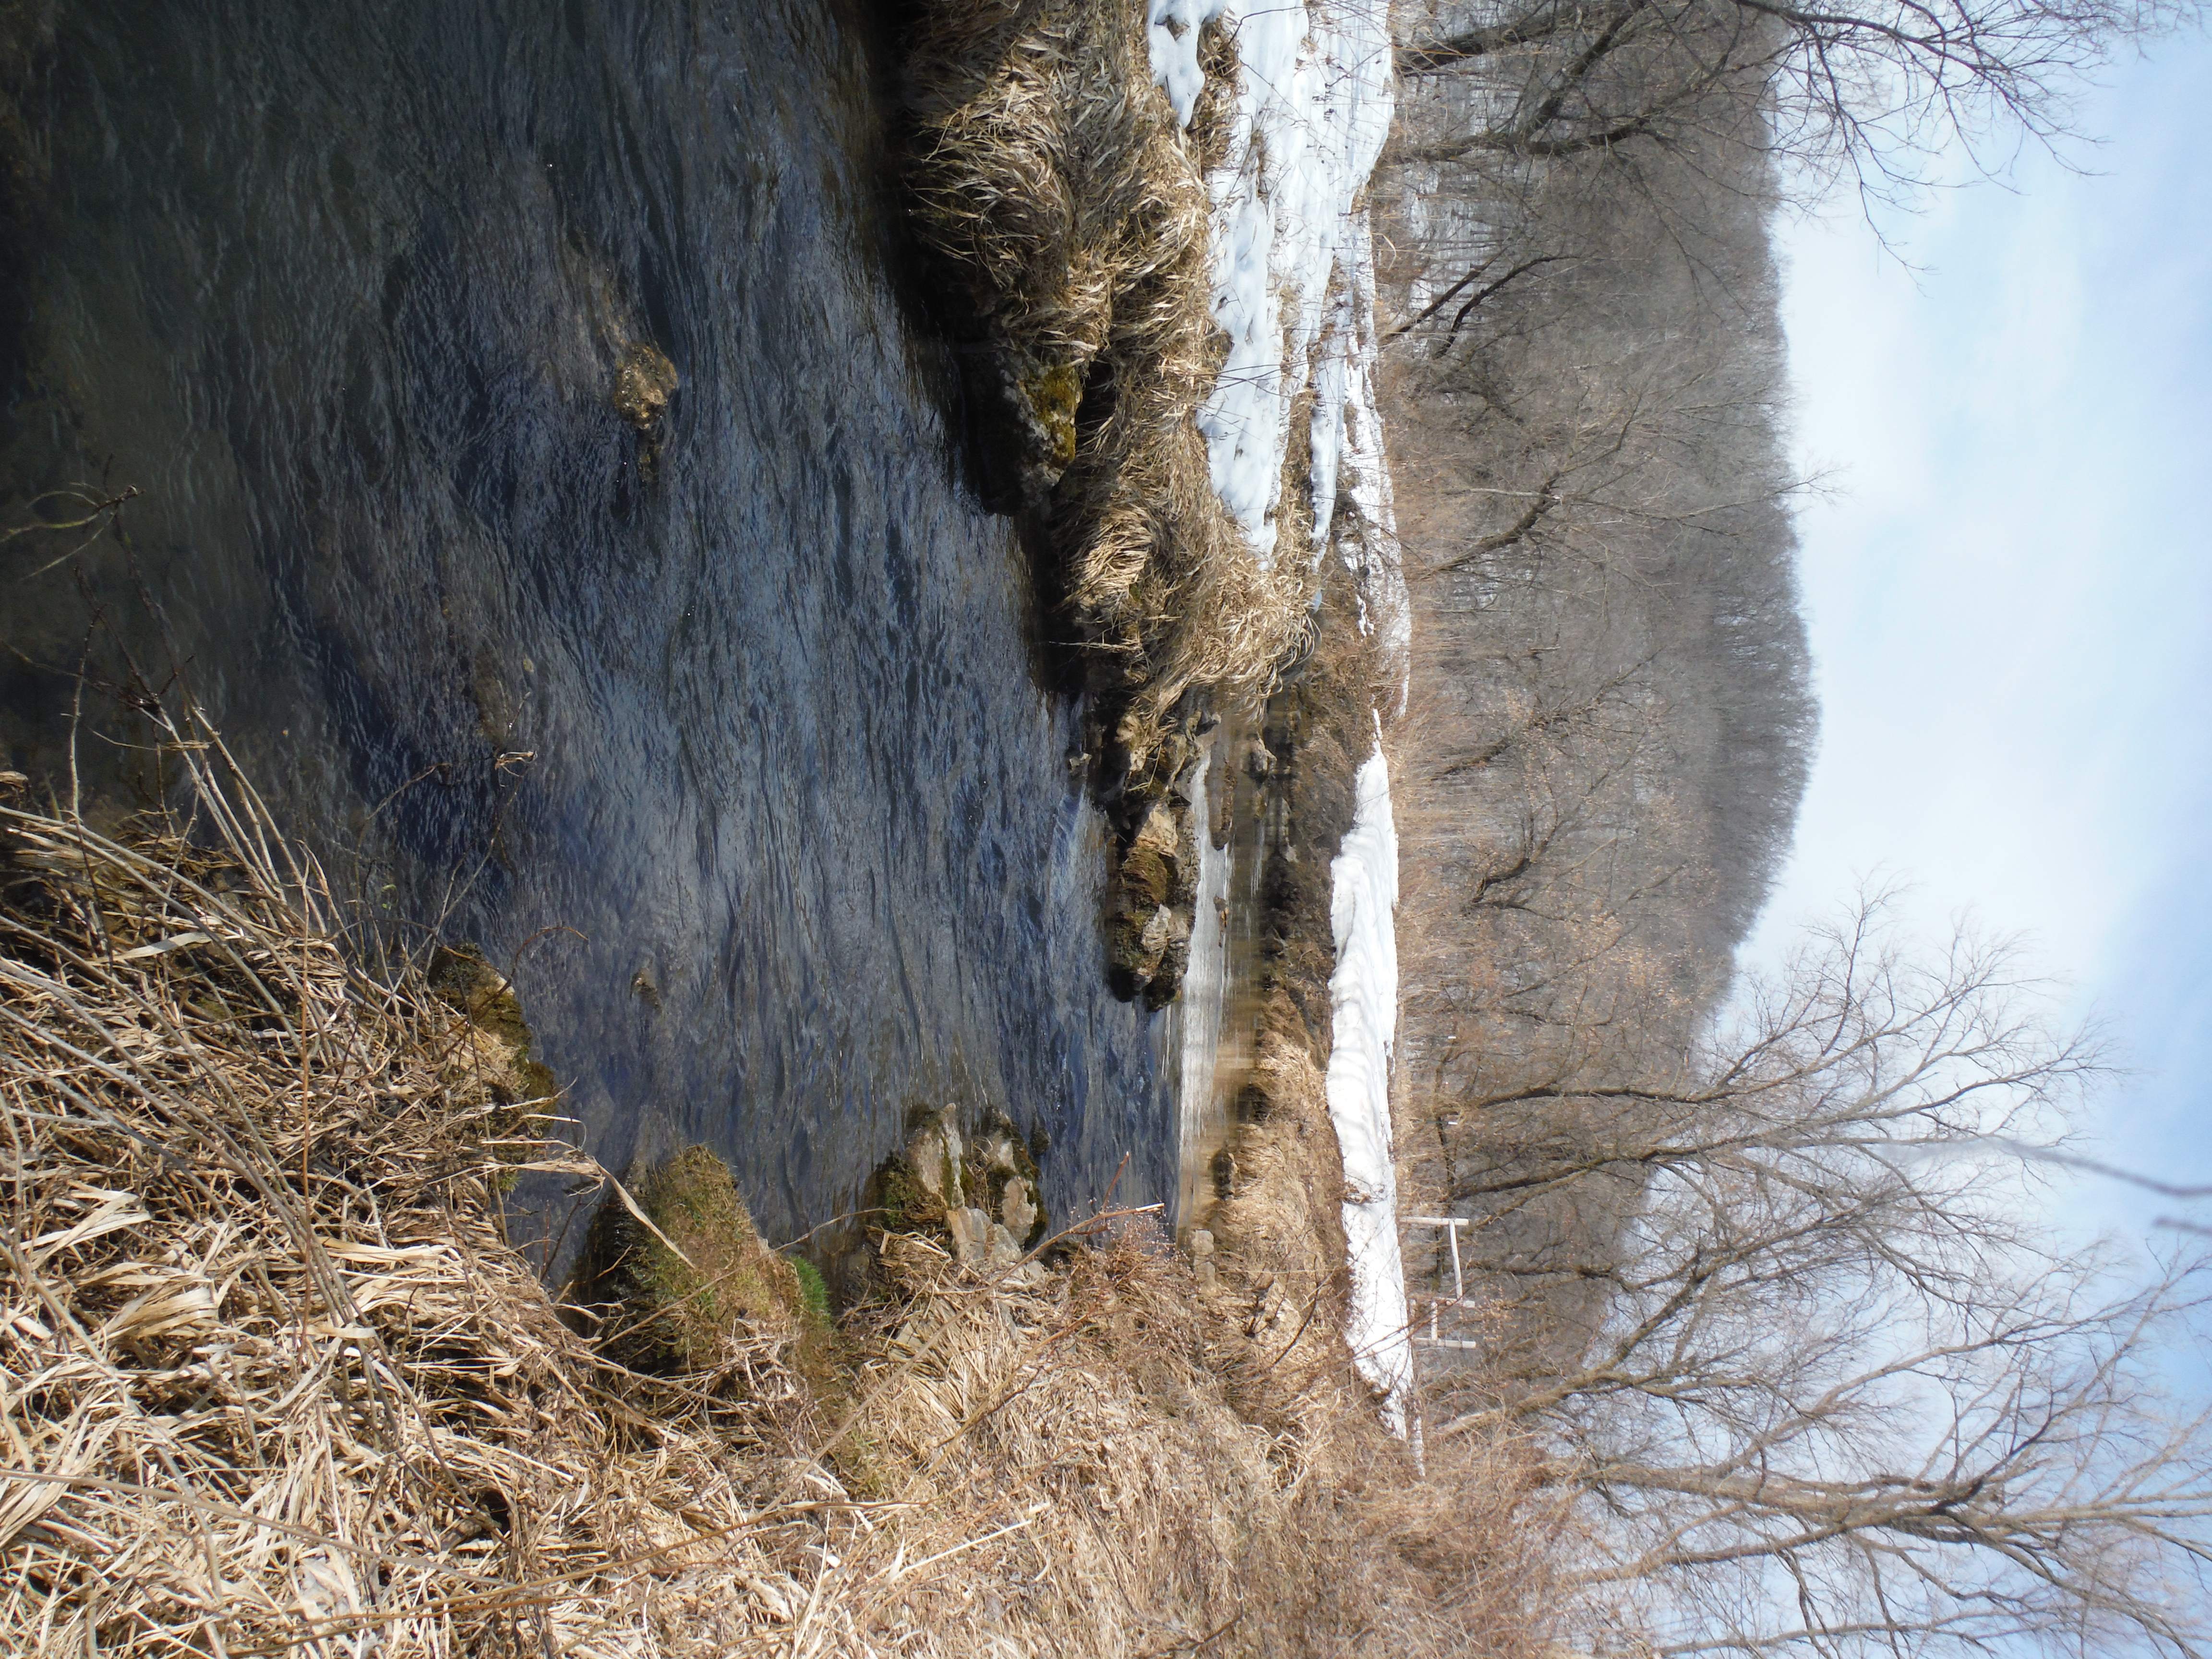 Plum Creek, Lower Kickapoo River Watershed (LW02)